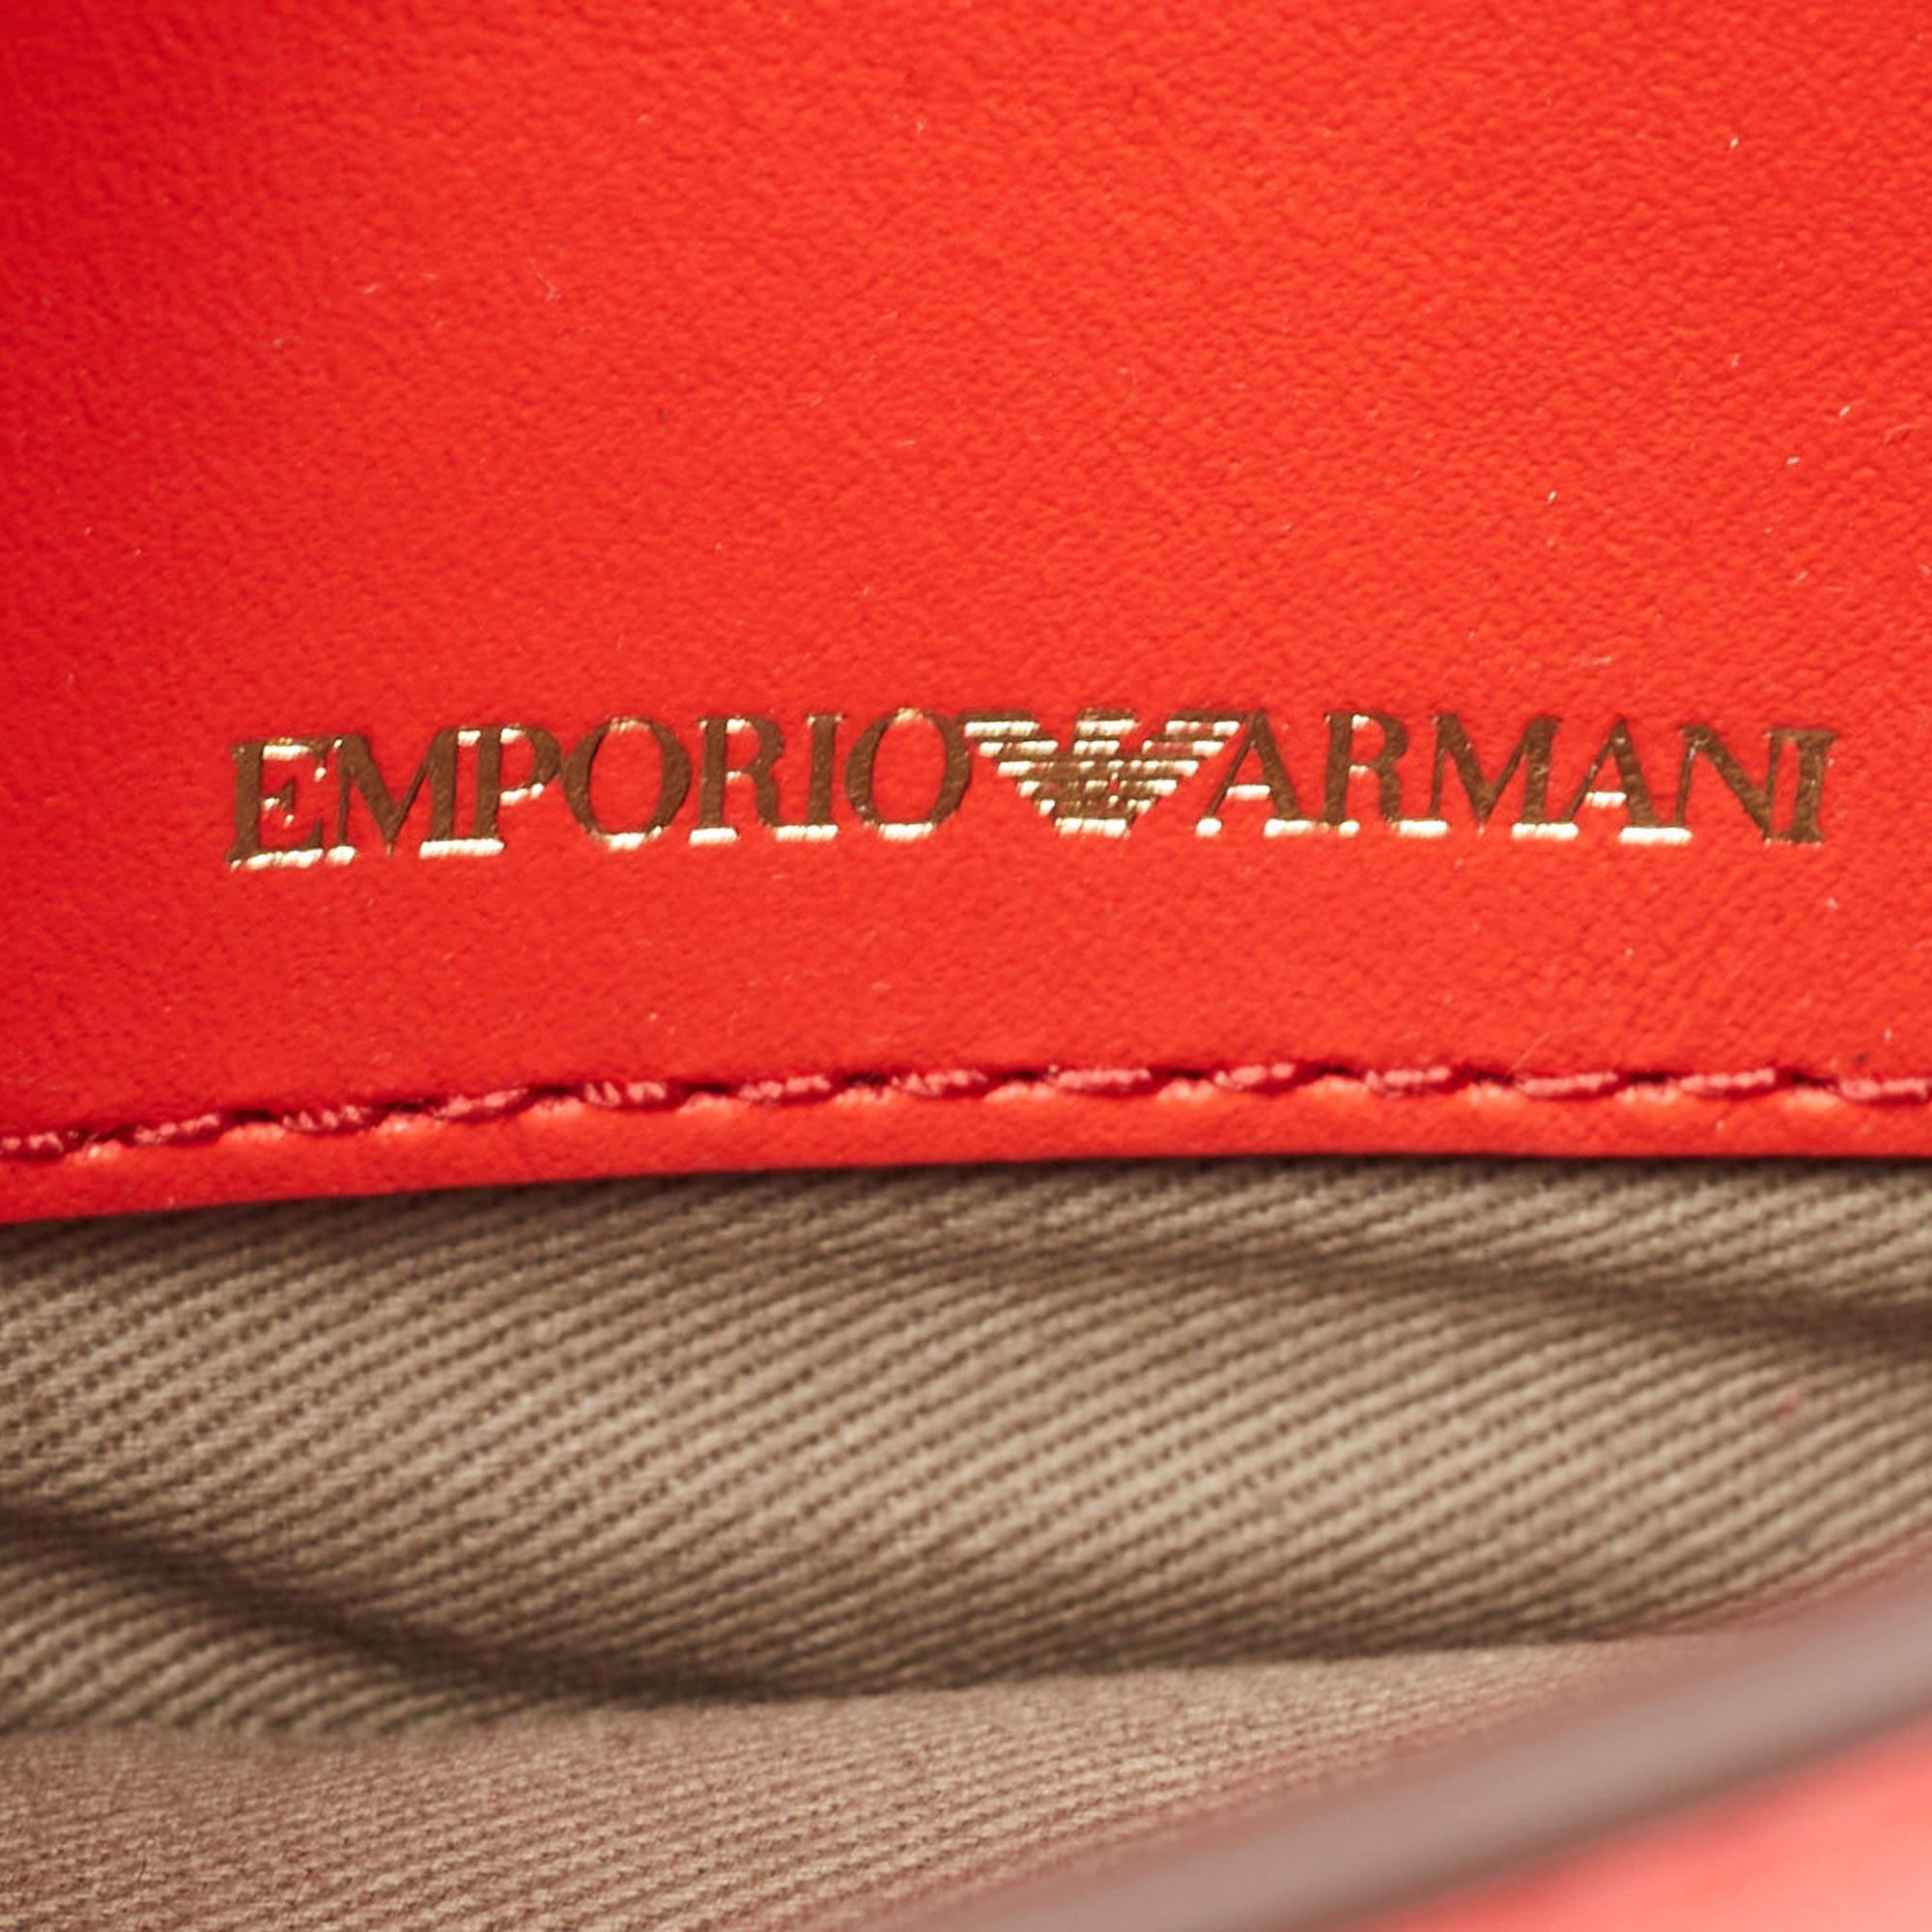 Emporio Armani Neon Red Leather Flap Crossbody Bag In Excellent Condition For Sale In Dubai, Al Qouz 2